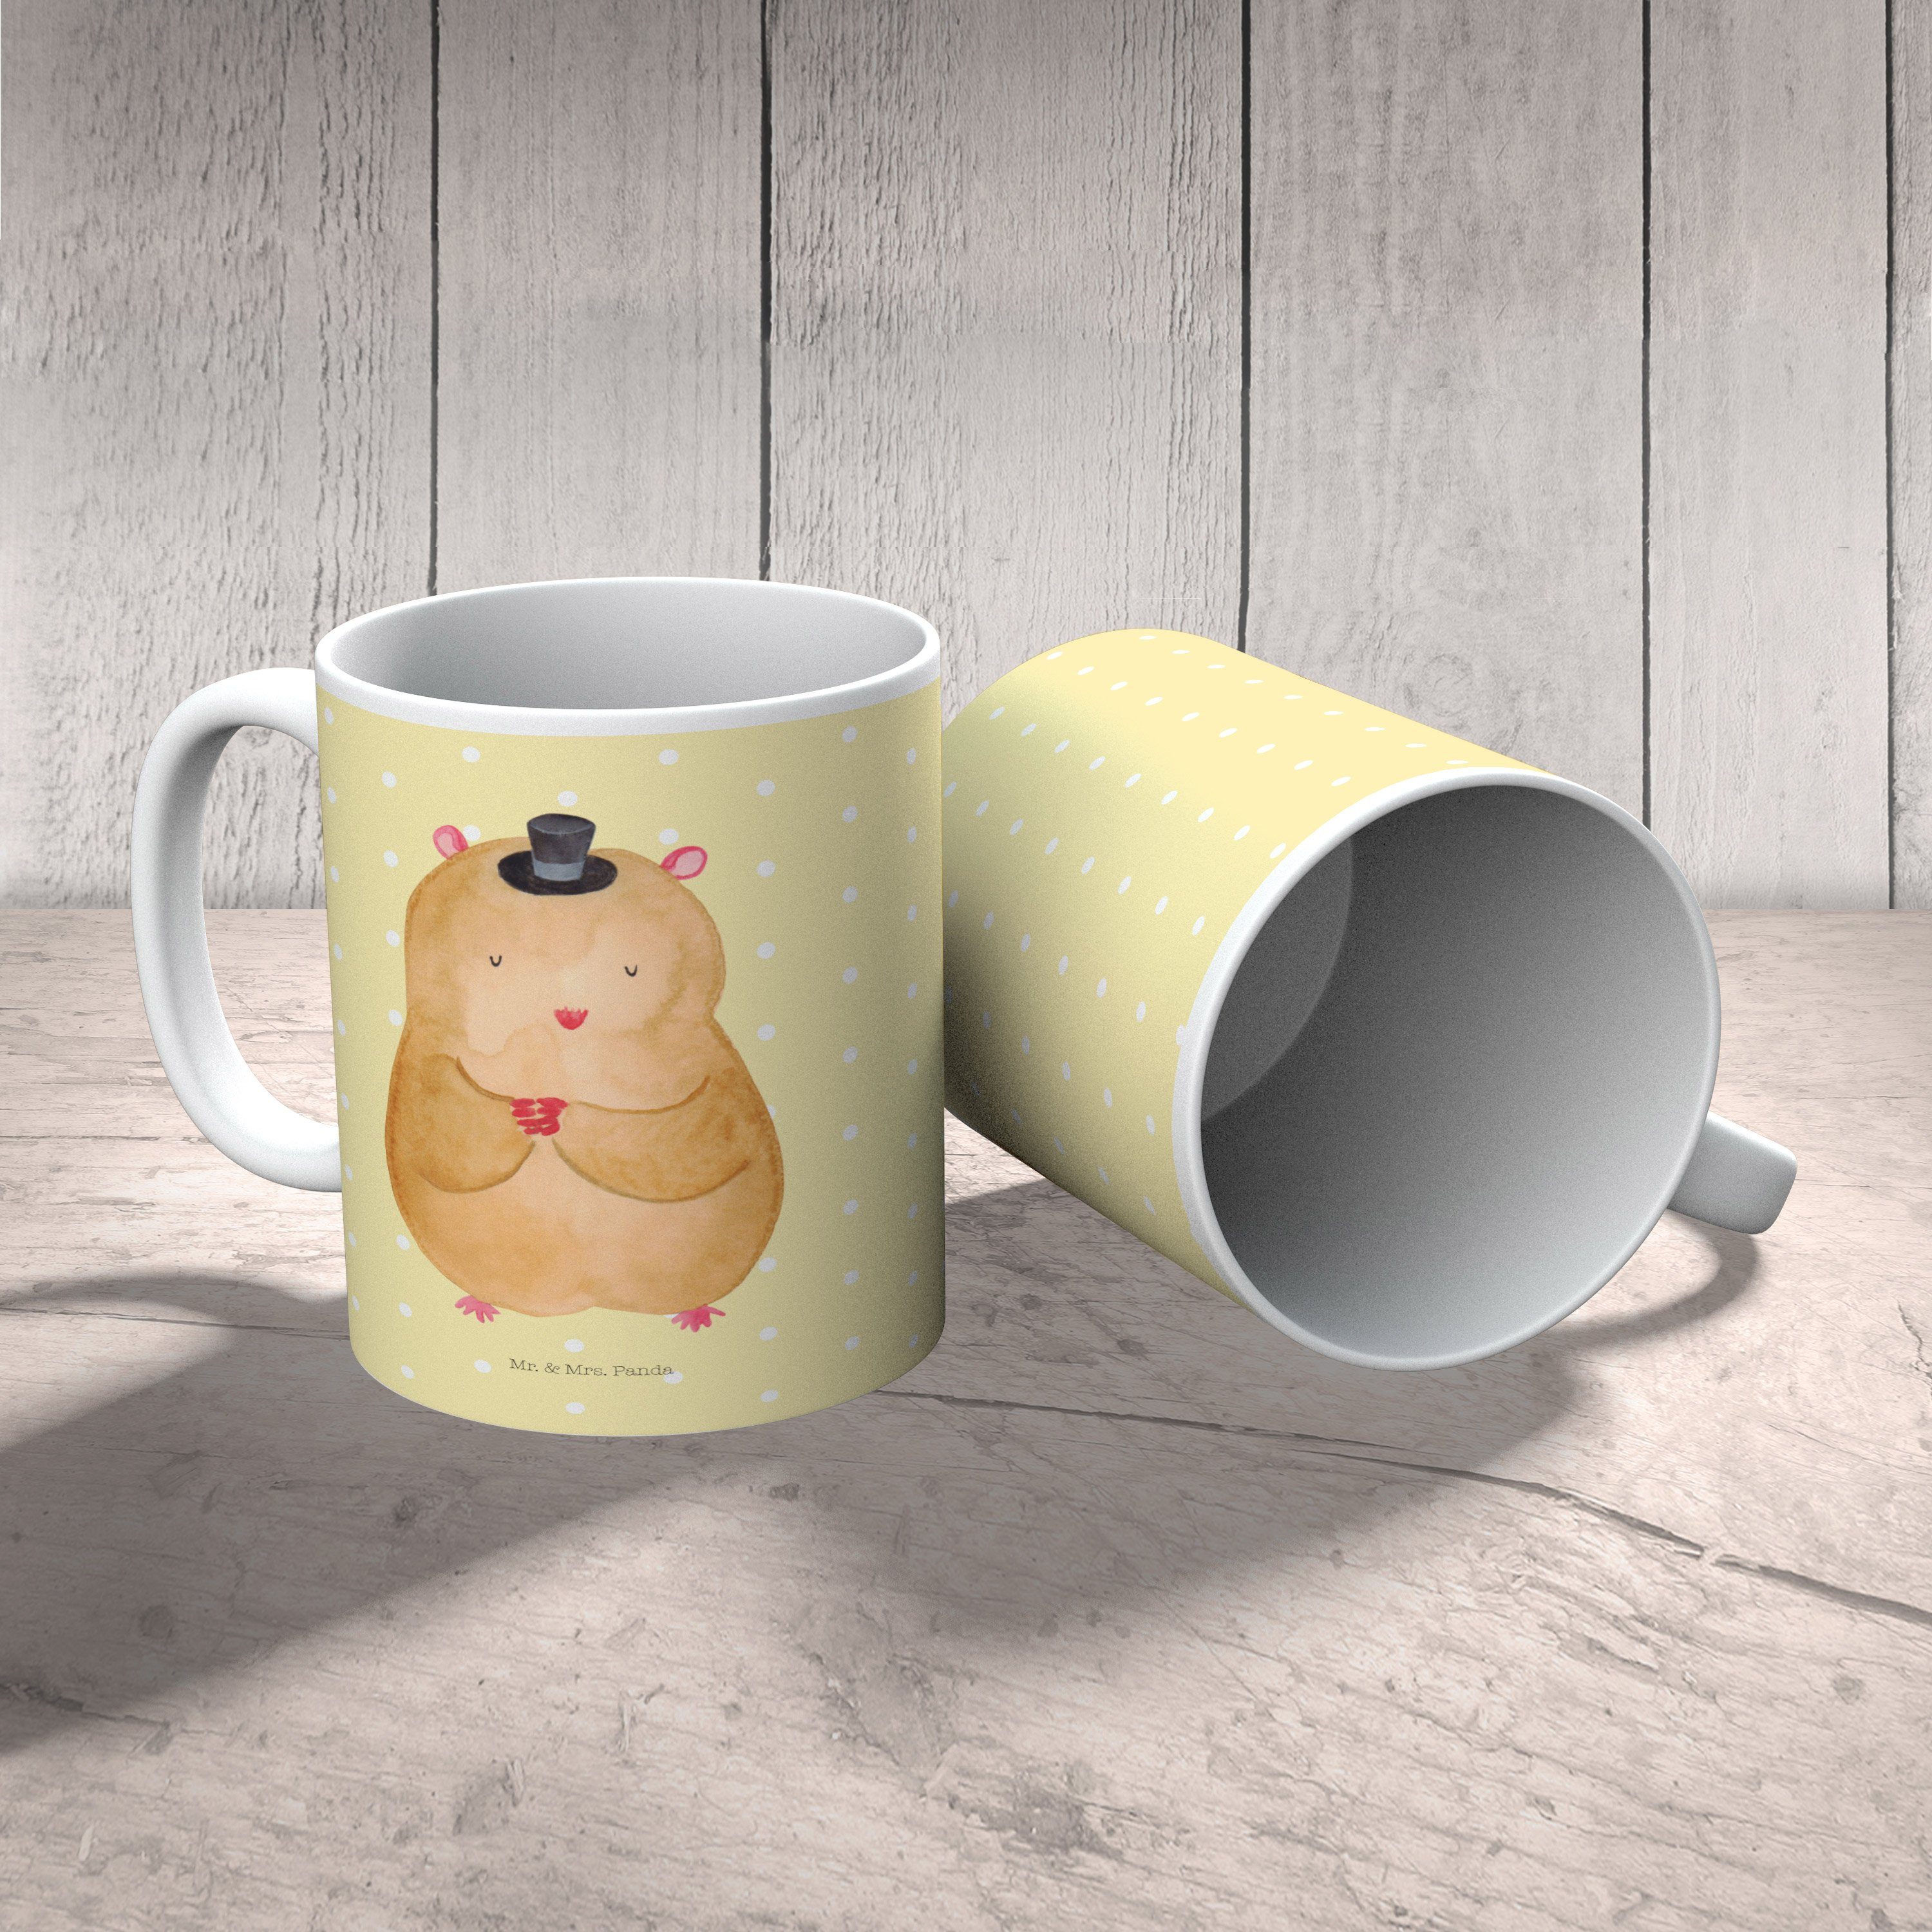 Mr. & Mrs. Gelb Keramik Tiermo, Tasse Tasse, Hut Panda Geschenk, - - Hamster Kaffeetasse, Pastell mit